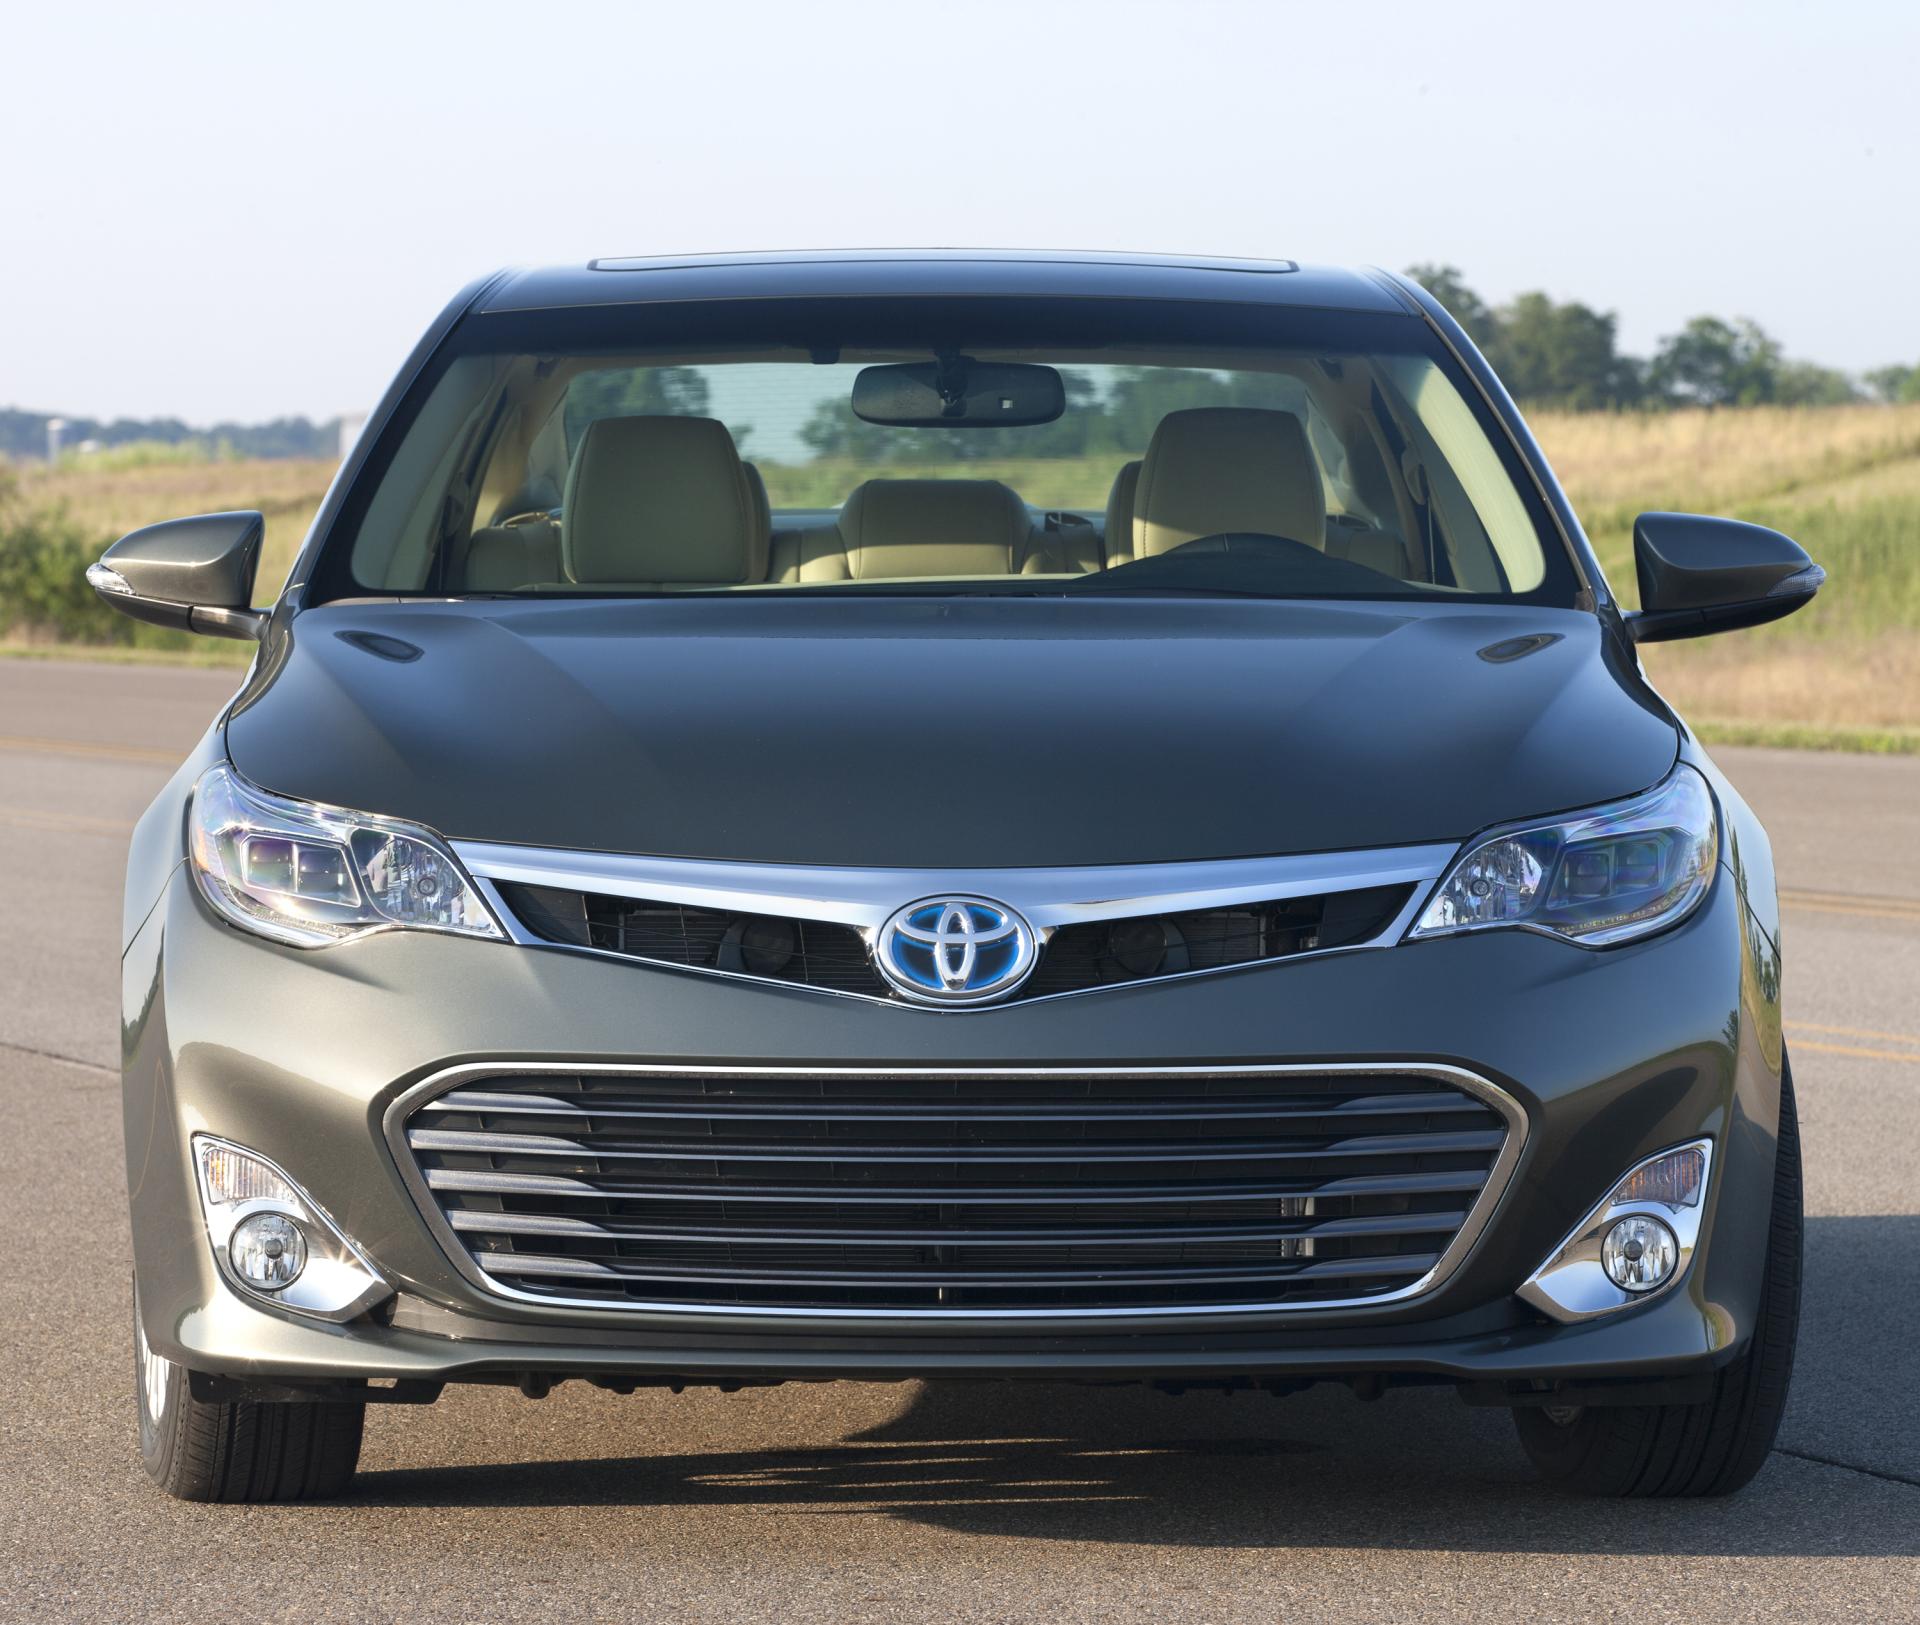 2013 Toyota Avalon Hybrid News and Information